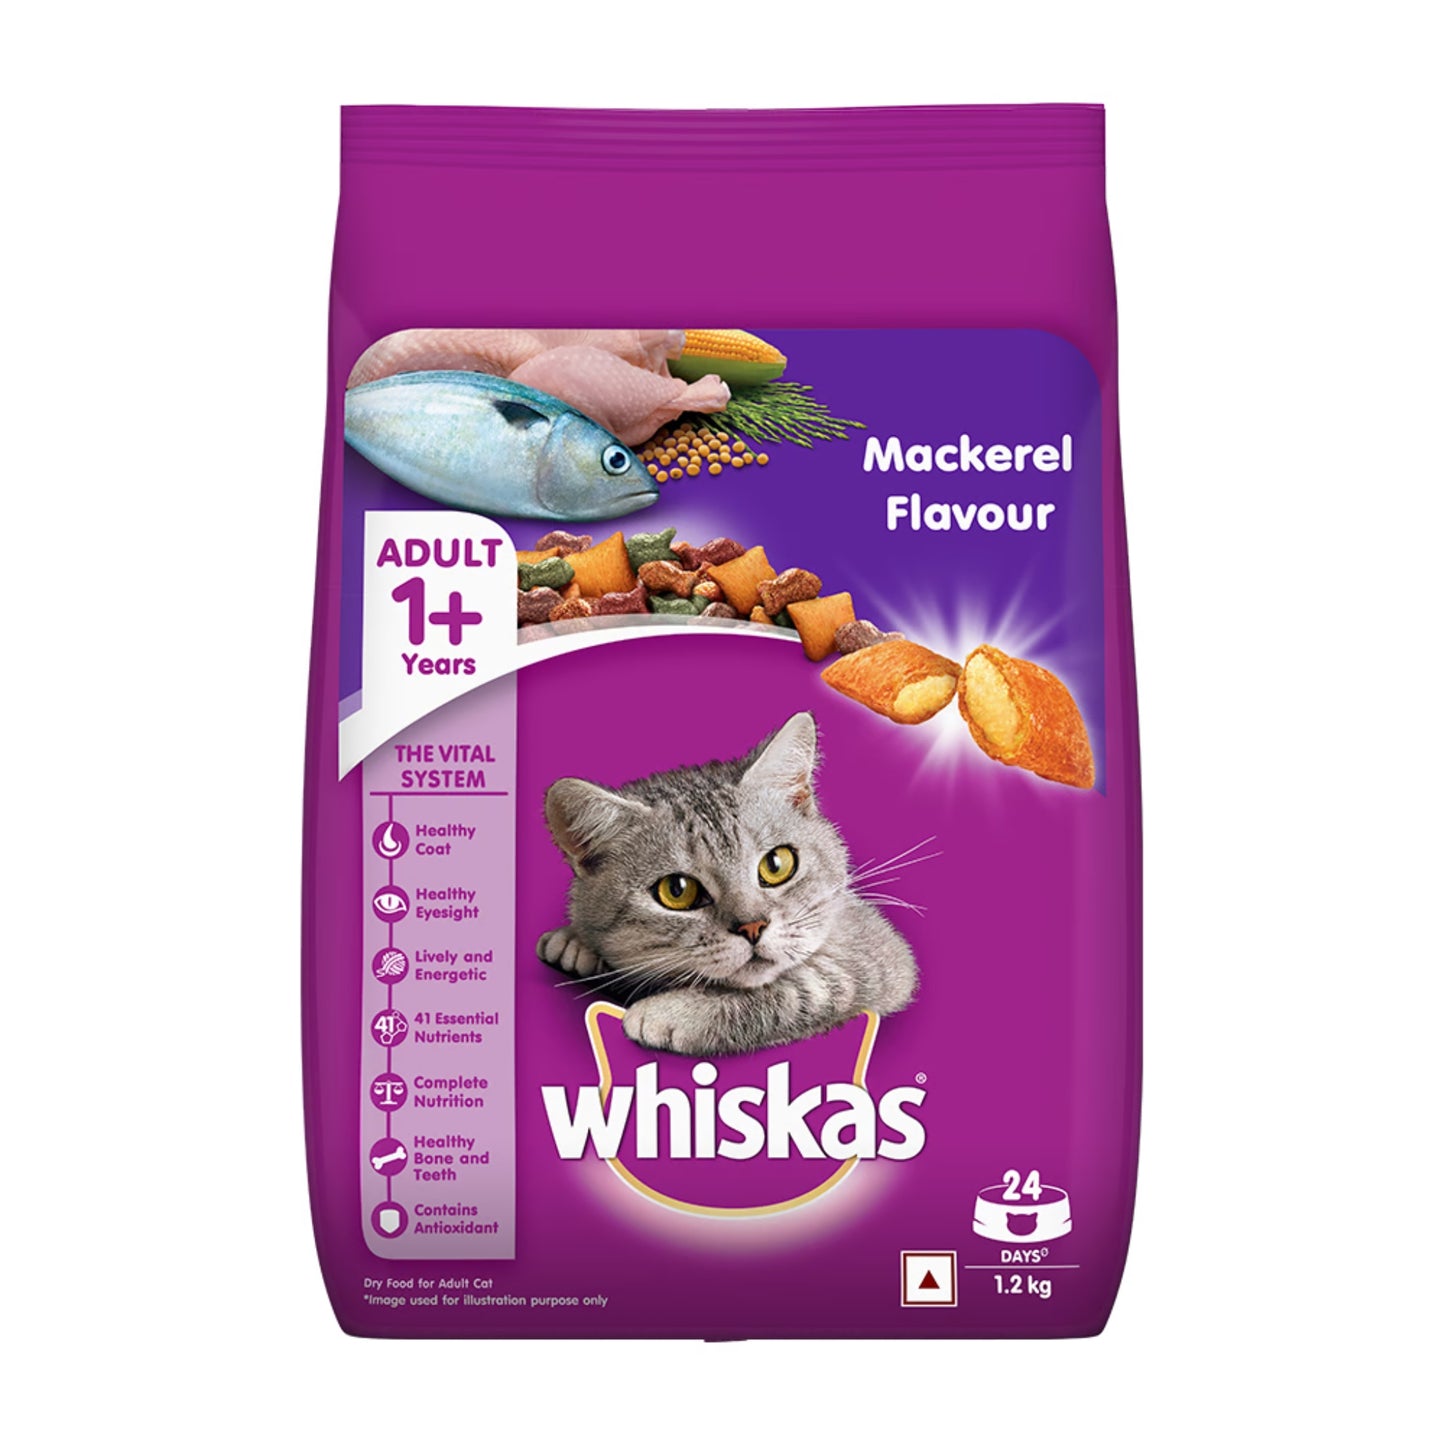 Whiskas Adult Dry Cat Food Food, Mackerel Flavour - 1.2Kg